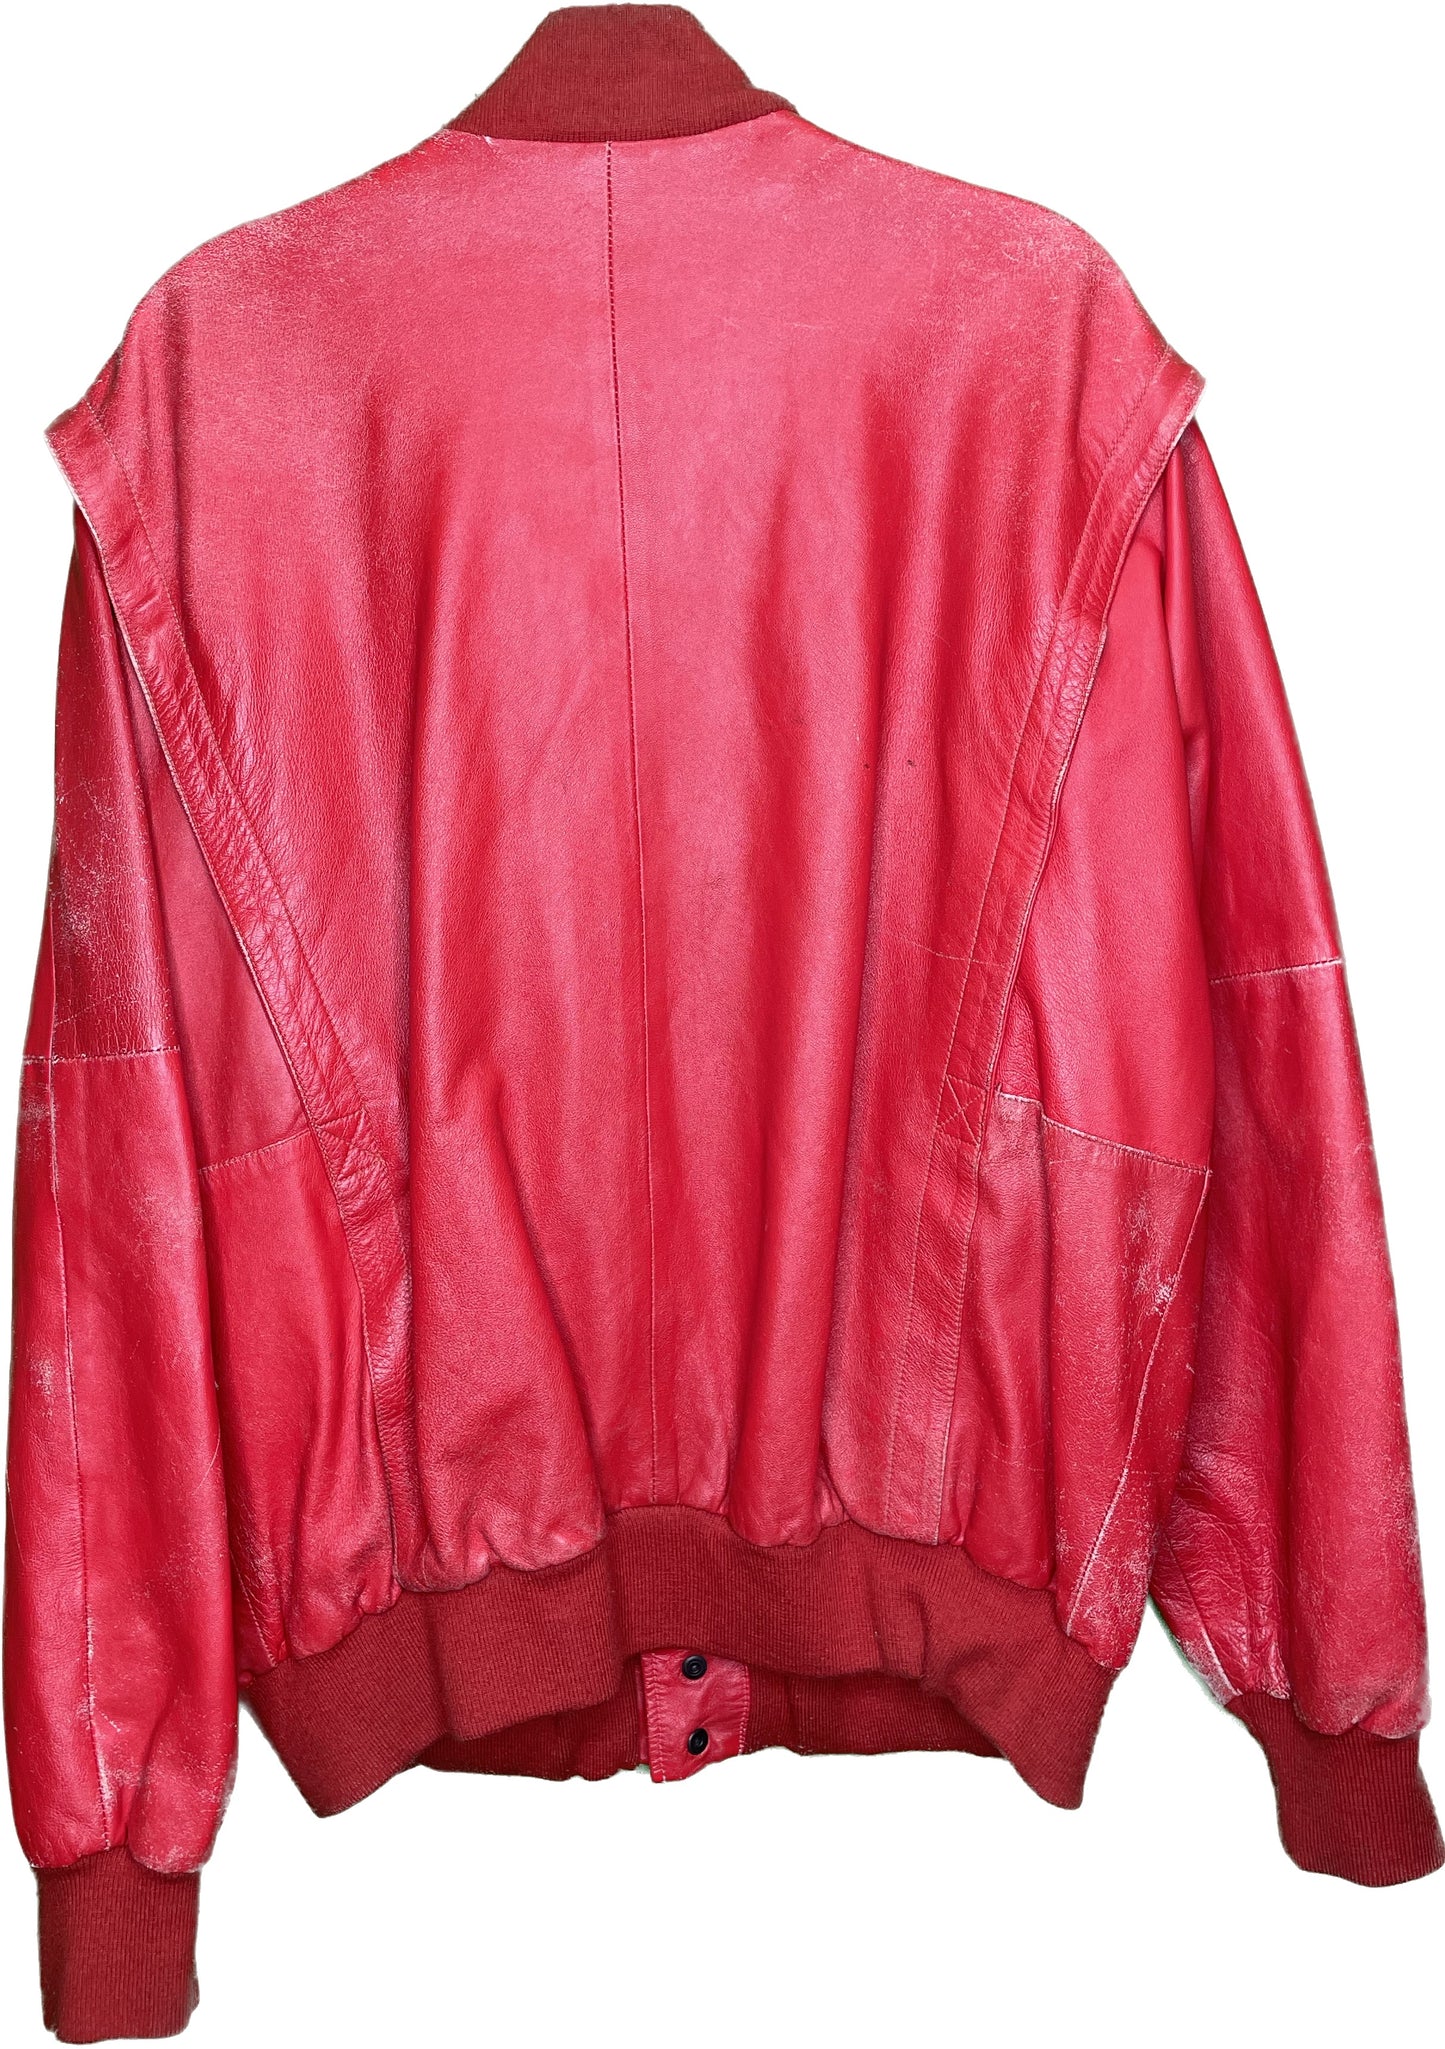 Vintage XL Red Leather Bomber Jacket